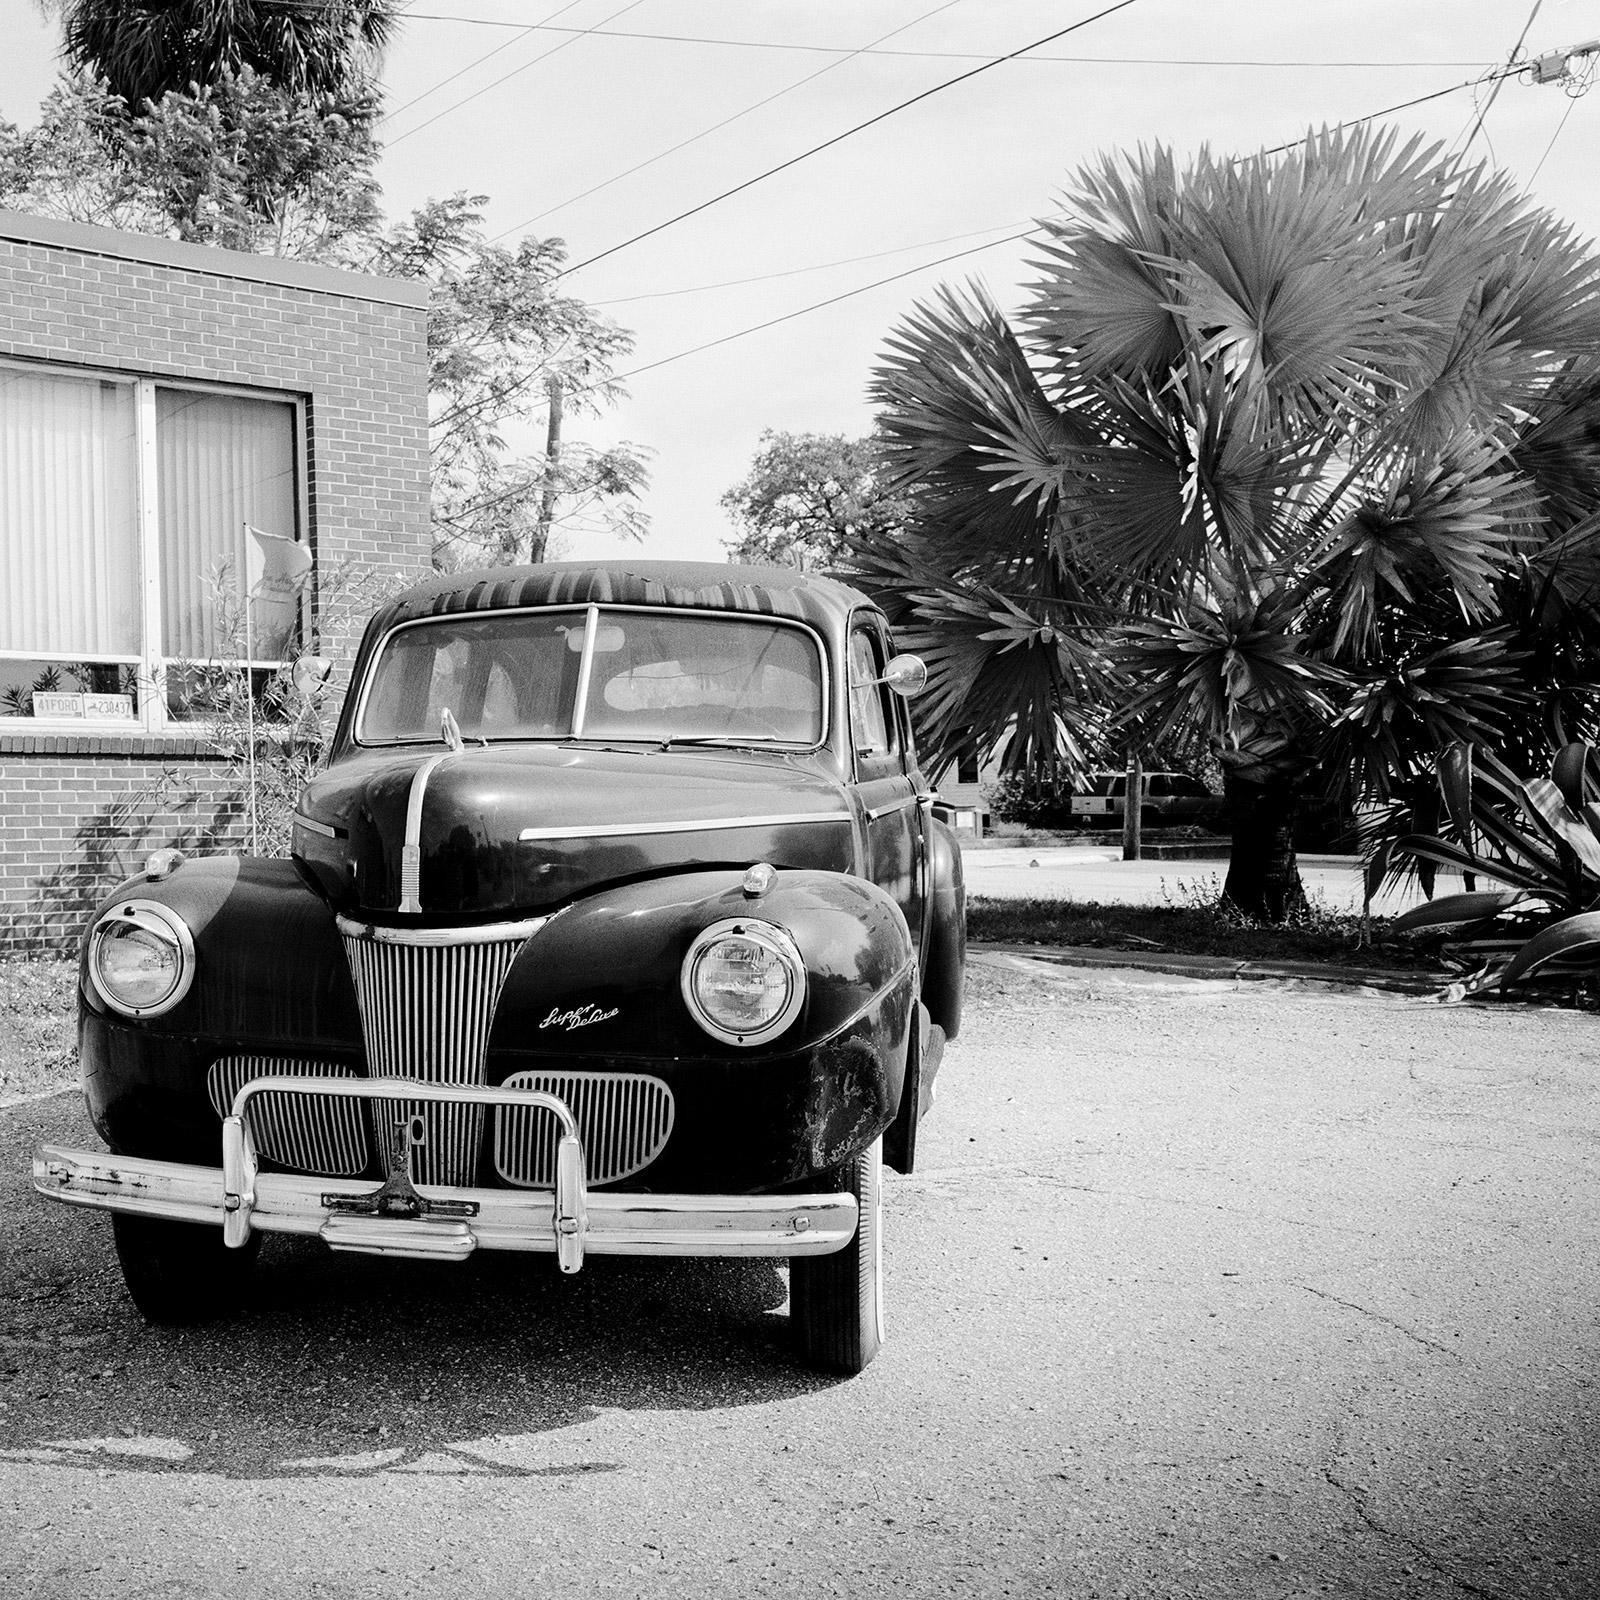 1941 Ford Super Deluxe Business Coupe, USA, photographie noir et blanc, paysage